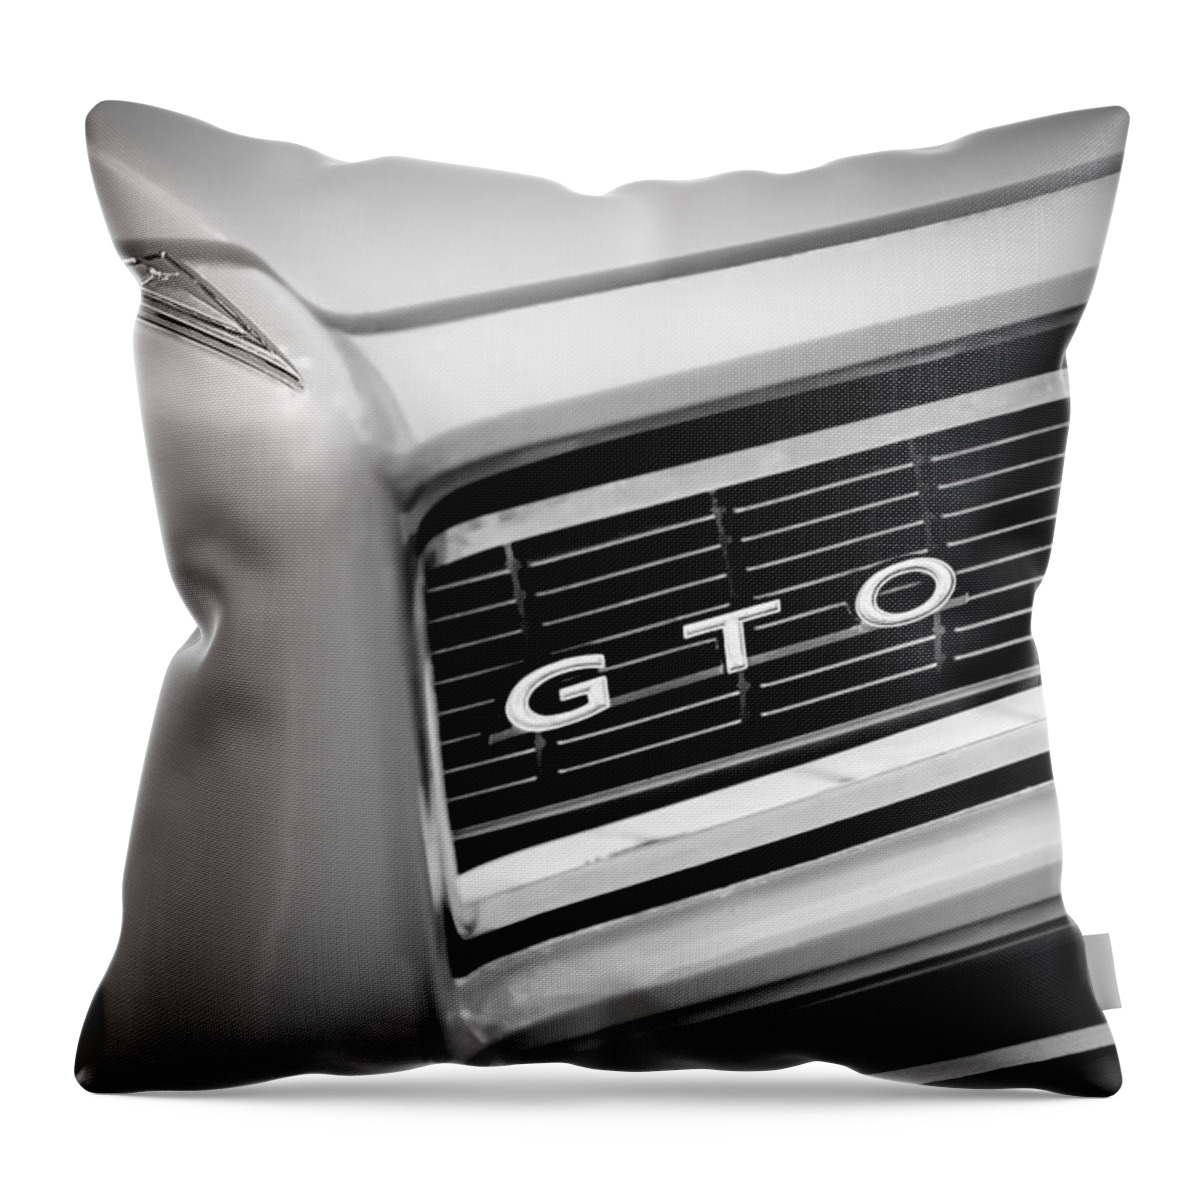 1968 Pontiac Gto Grille Emblem Throw Pillow featuring the photograph 1968 Pontiac GTO Grille Emblem by Jill Reger